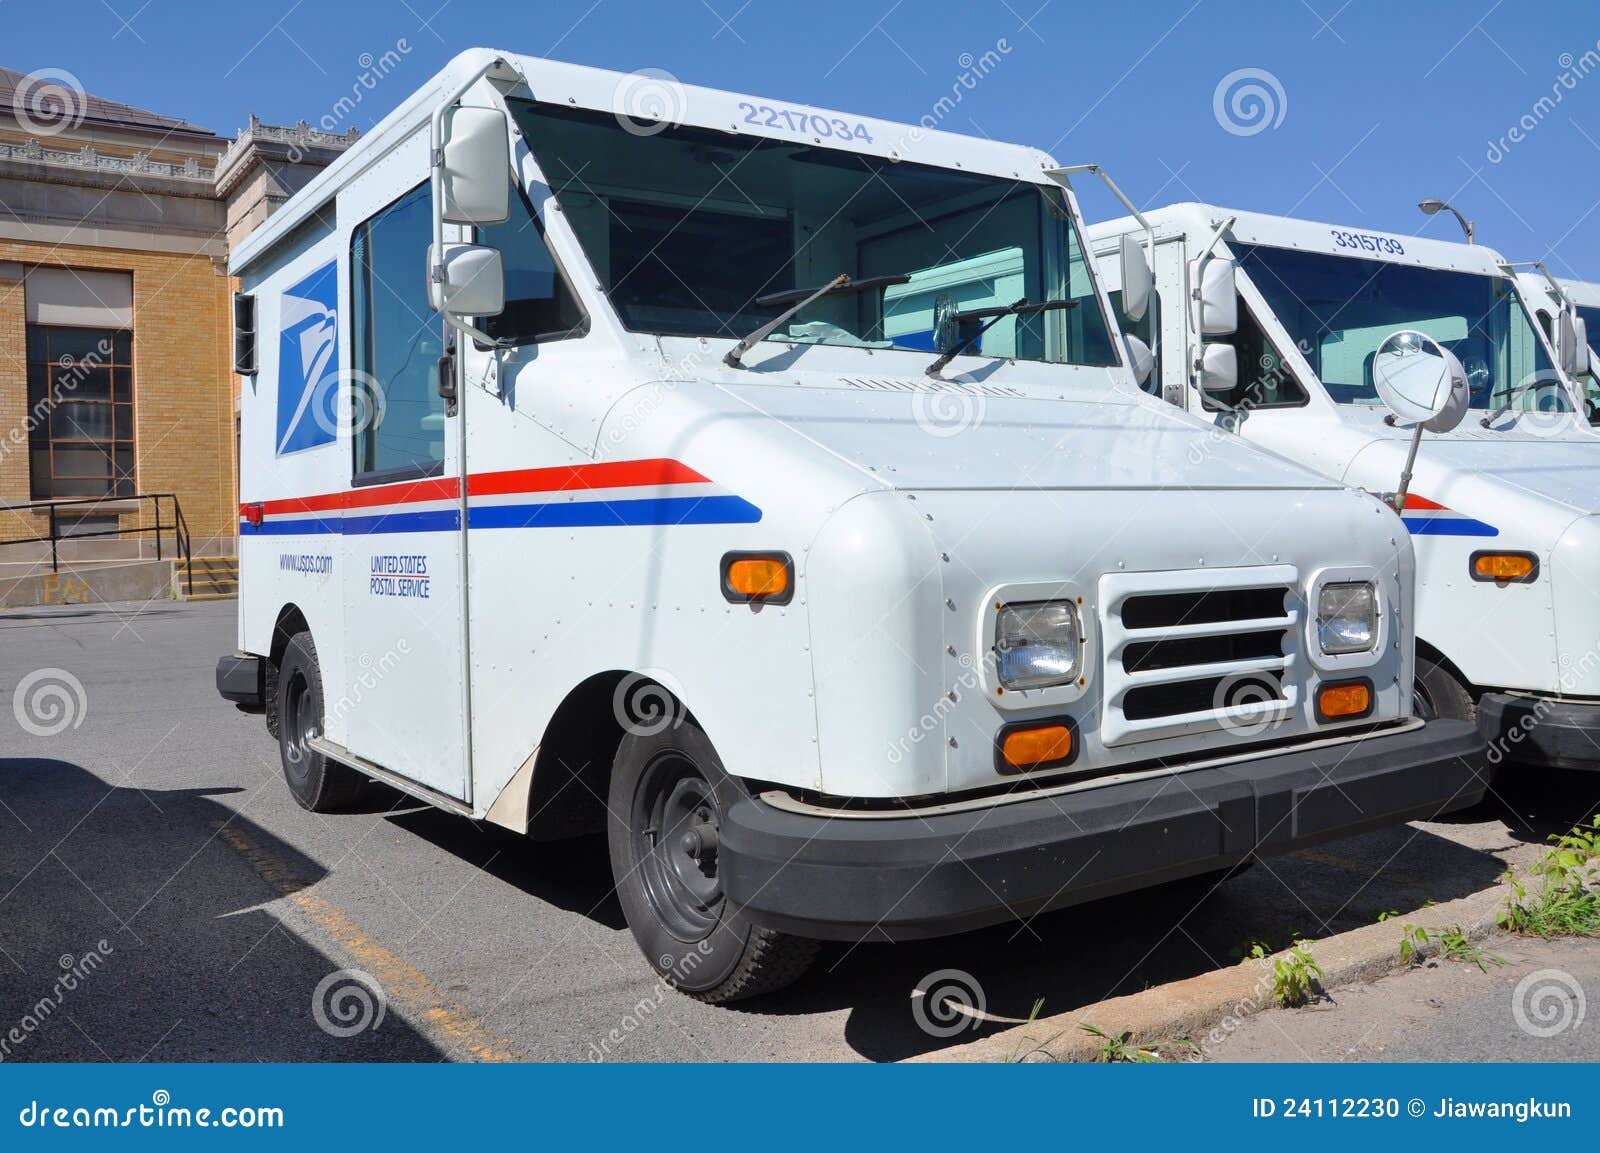 USPS Postal Vehicle Editorial Image - Image: 24112230